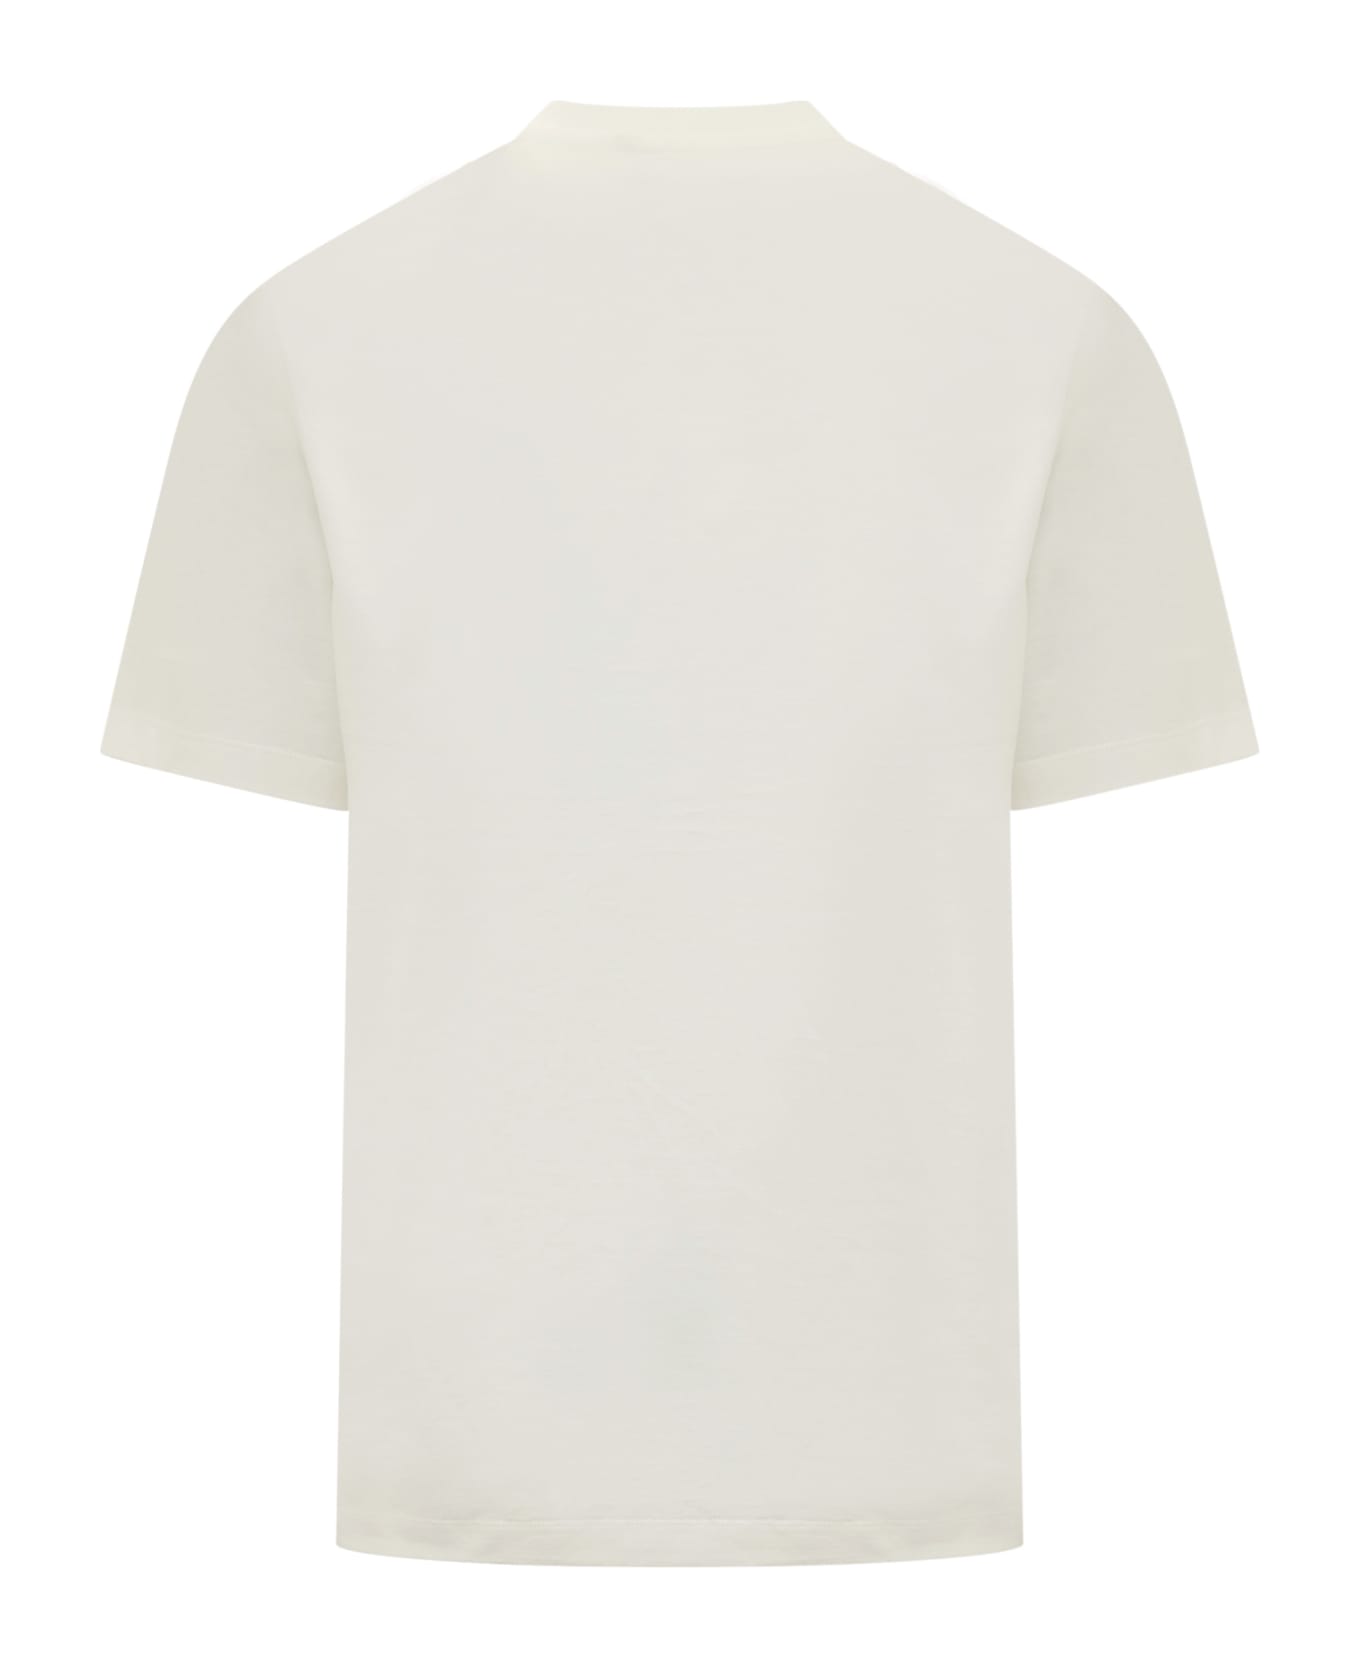 Y-3 Gfx T-shirt - White